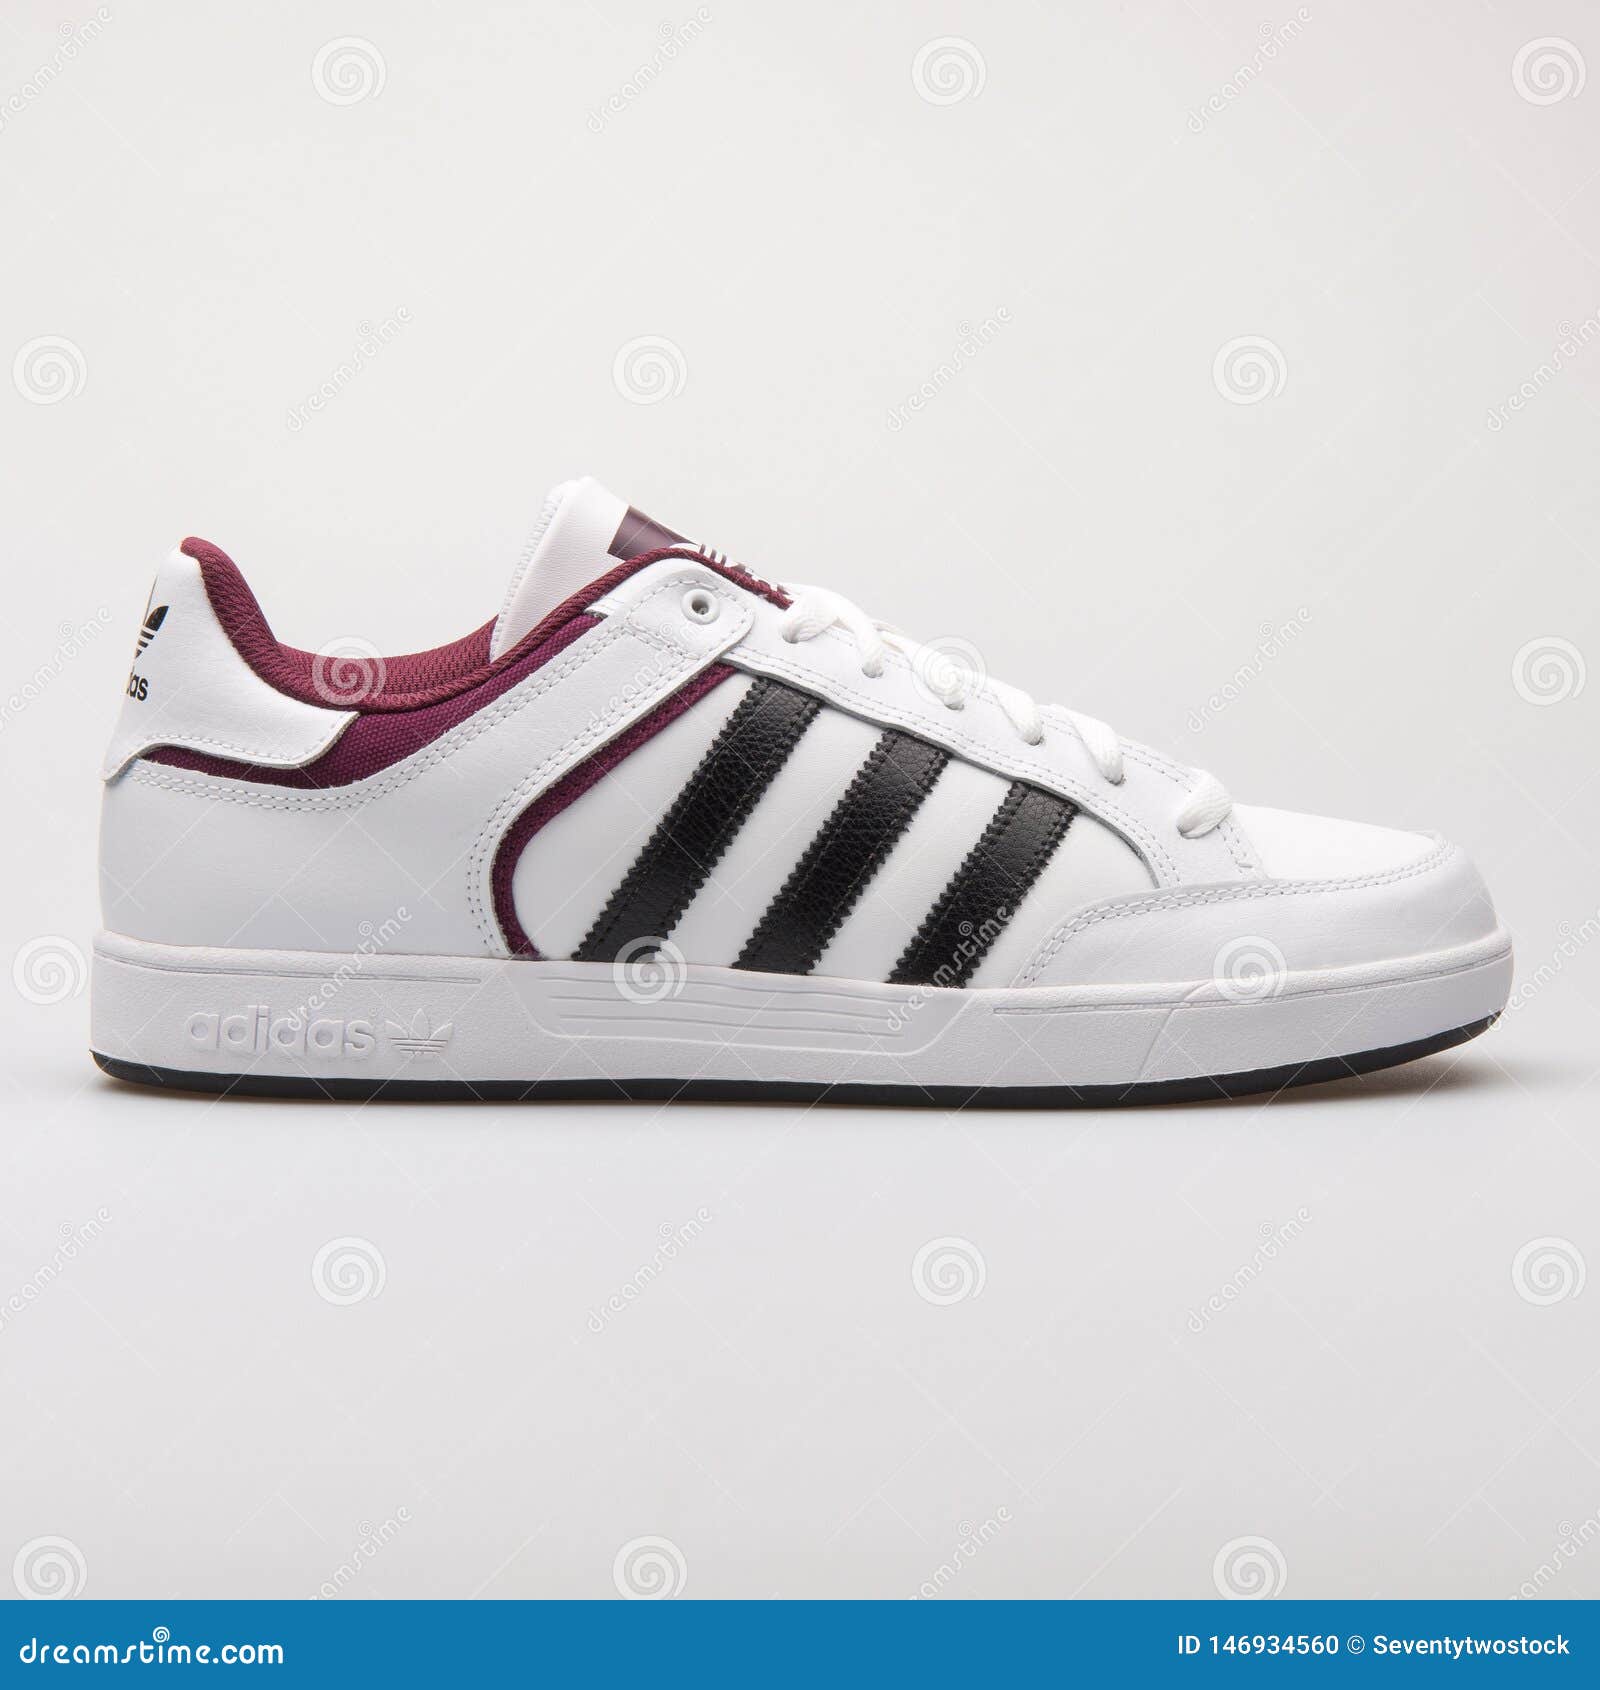 Varial Low White, Burgundy and Black Sneaker Image - Image mens, adidas: 146934560